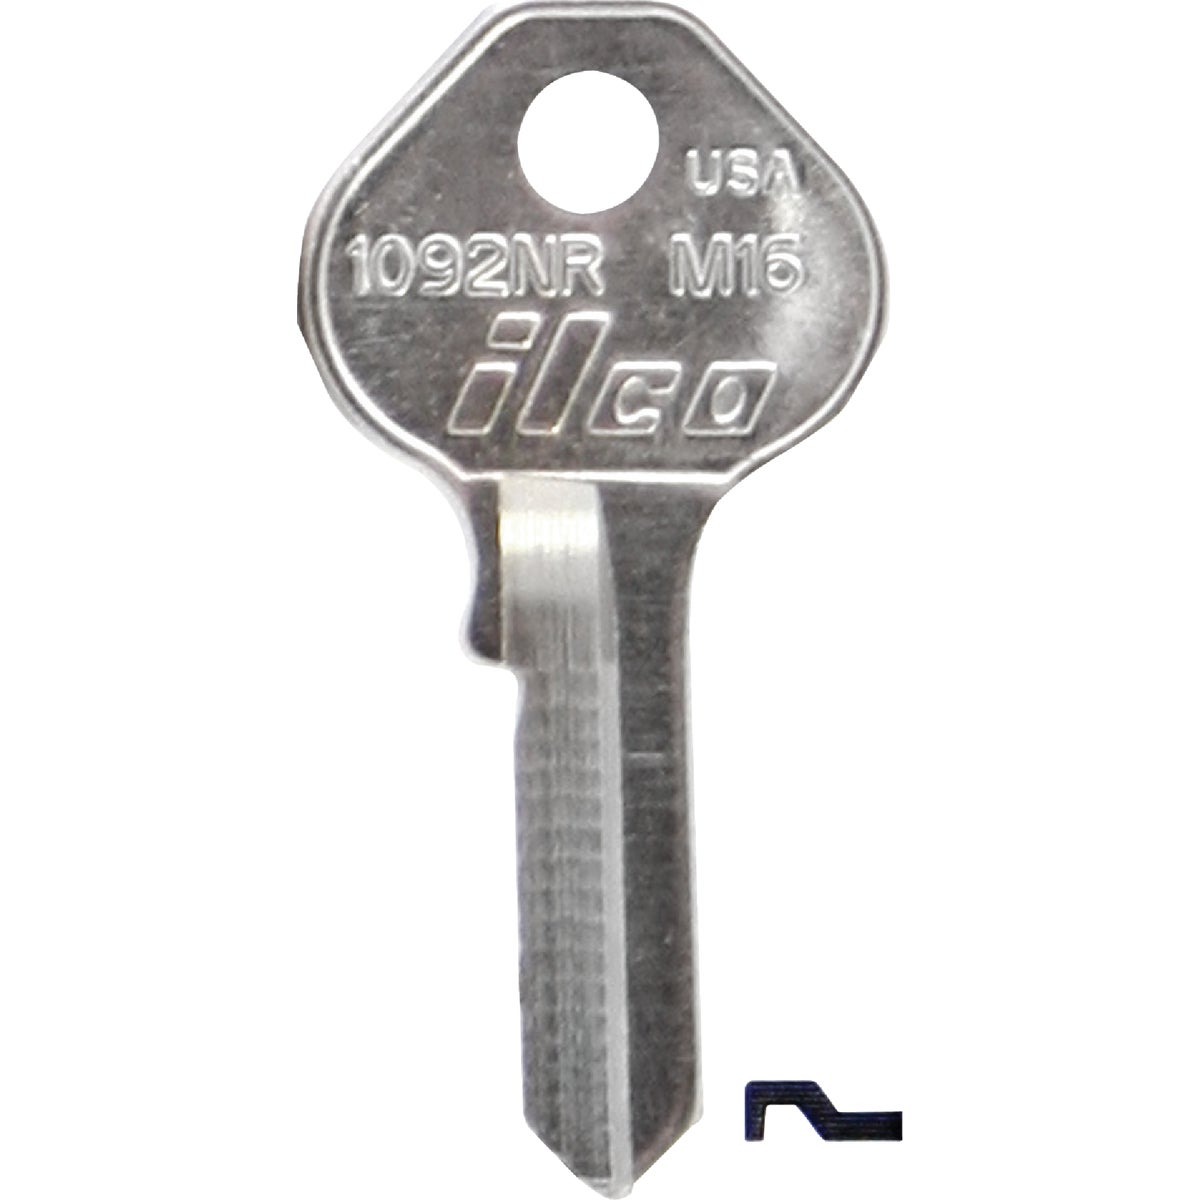 ILCO Master Nickel Plated Padlock Key M16 / 1092NR (10-Pack)